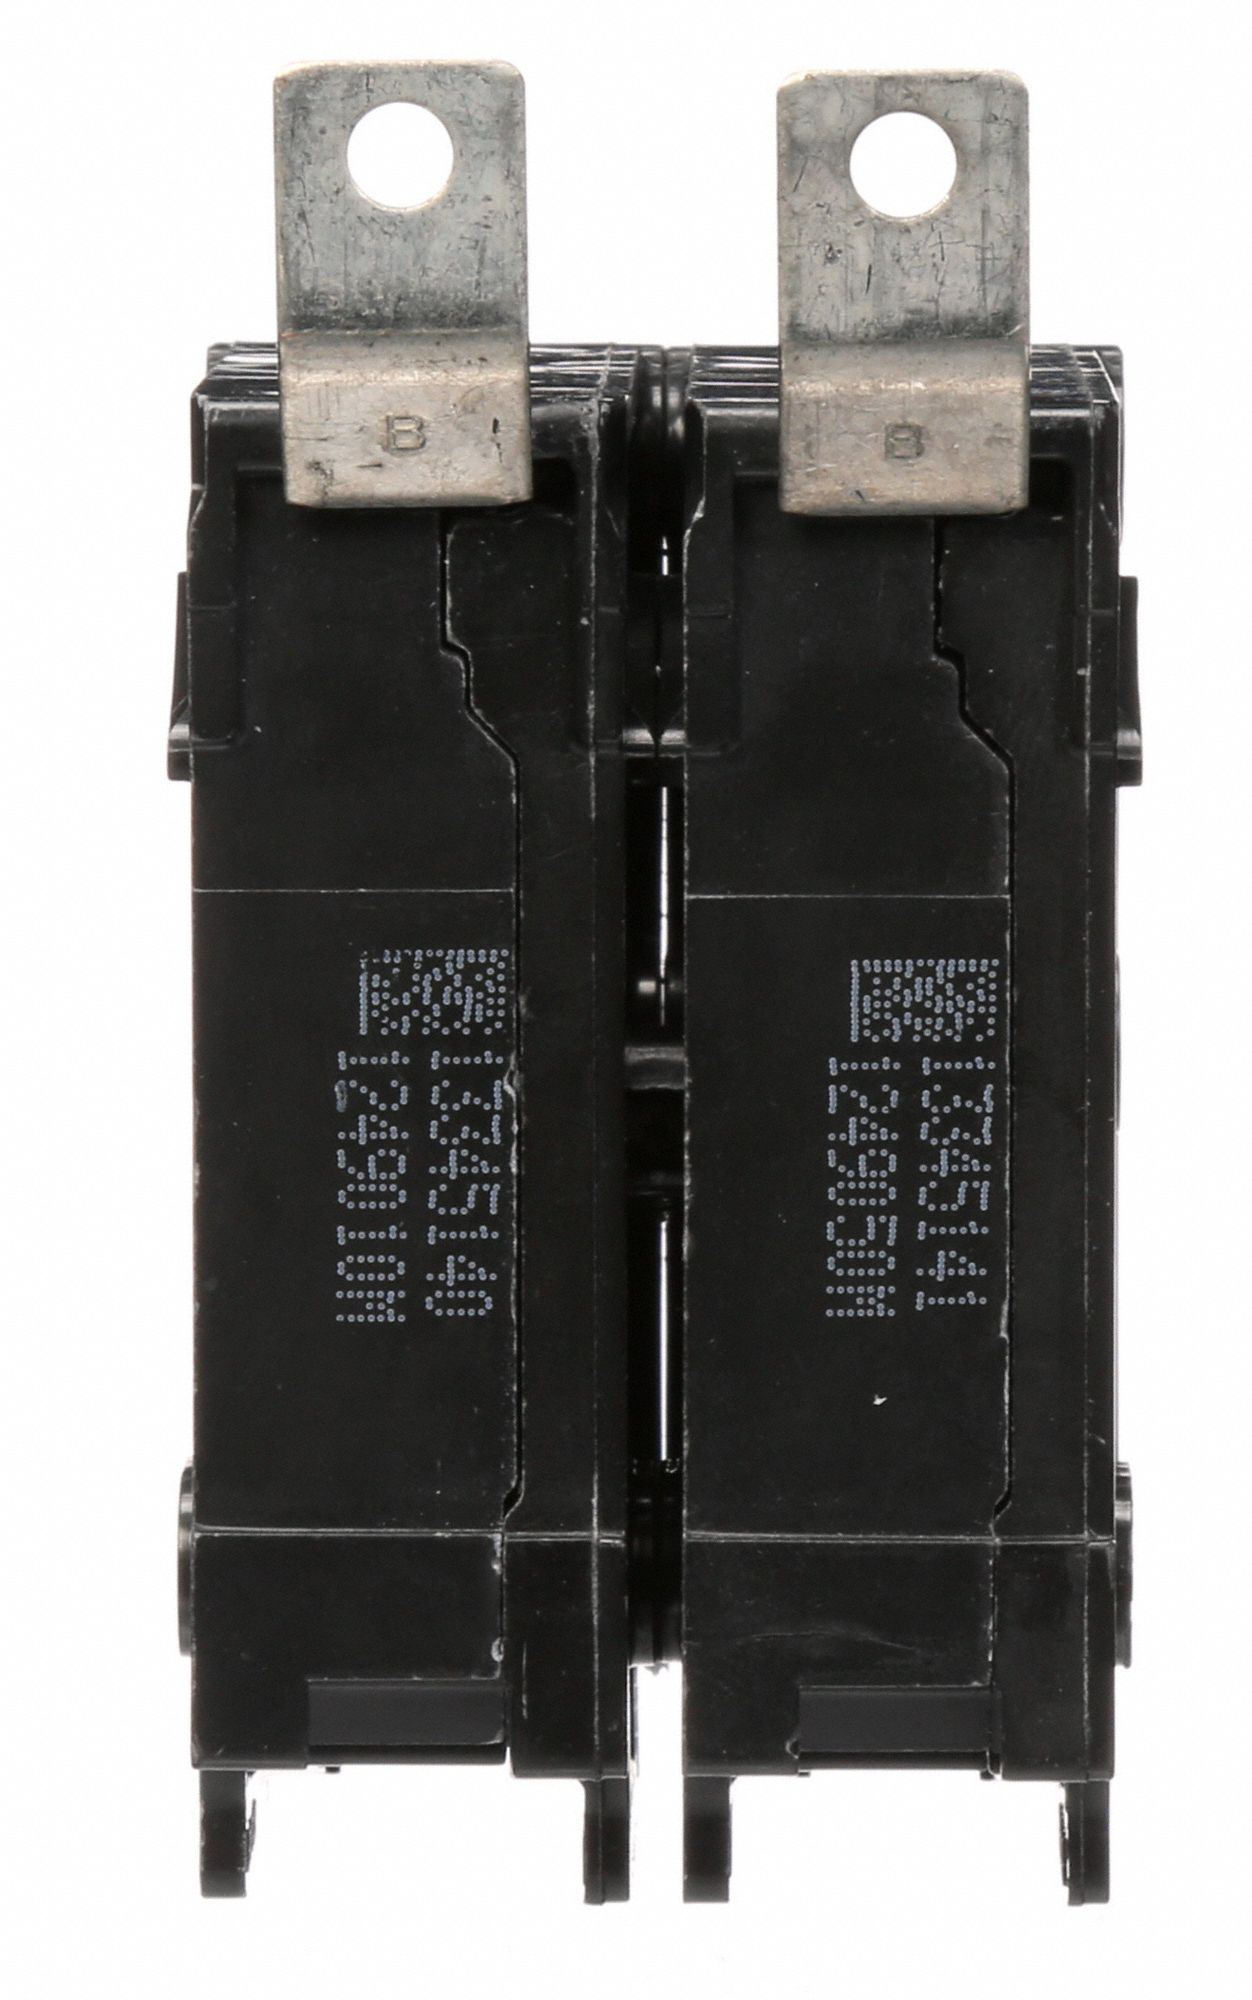 Siemens B230H Type BLH 2 Pole 30amp Circuit Breaker for sale online